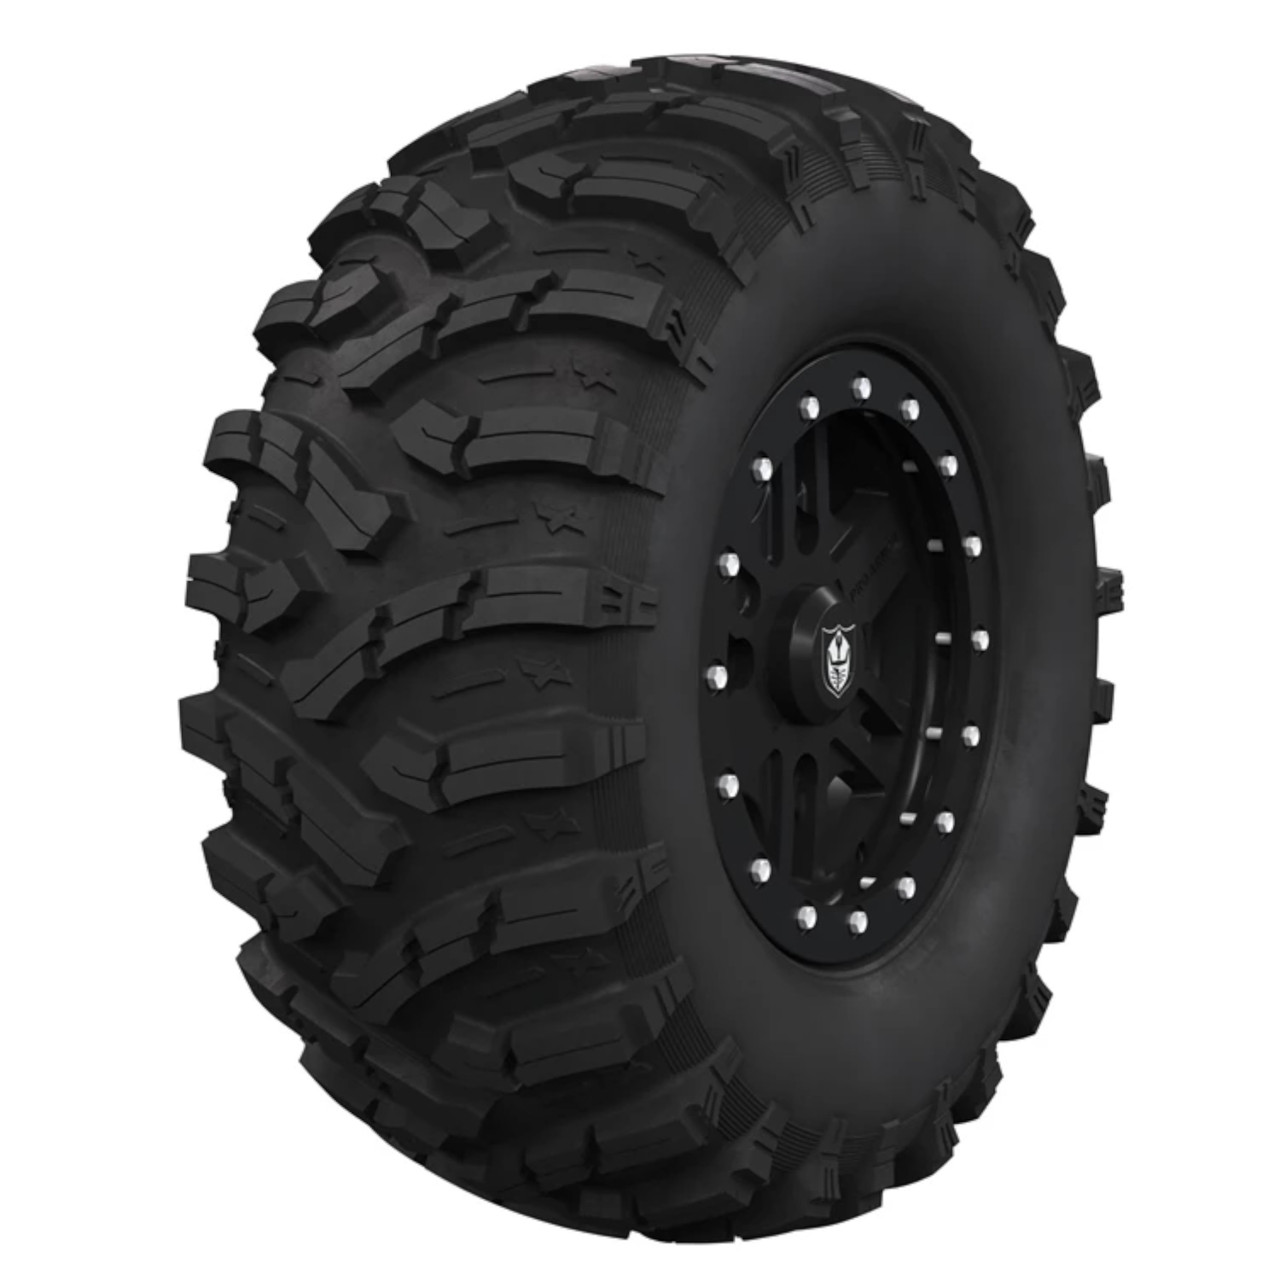 Polaris New OEM Pro Armor Wheel & Tire Set: X Terrain, 29 Inch Diameter, 2889981